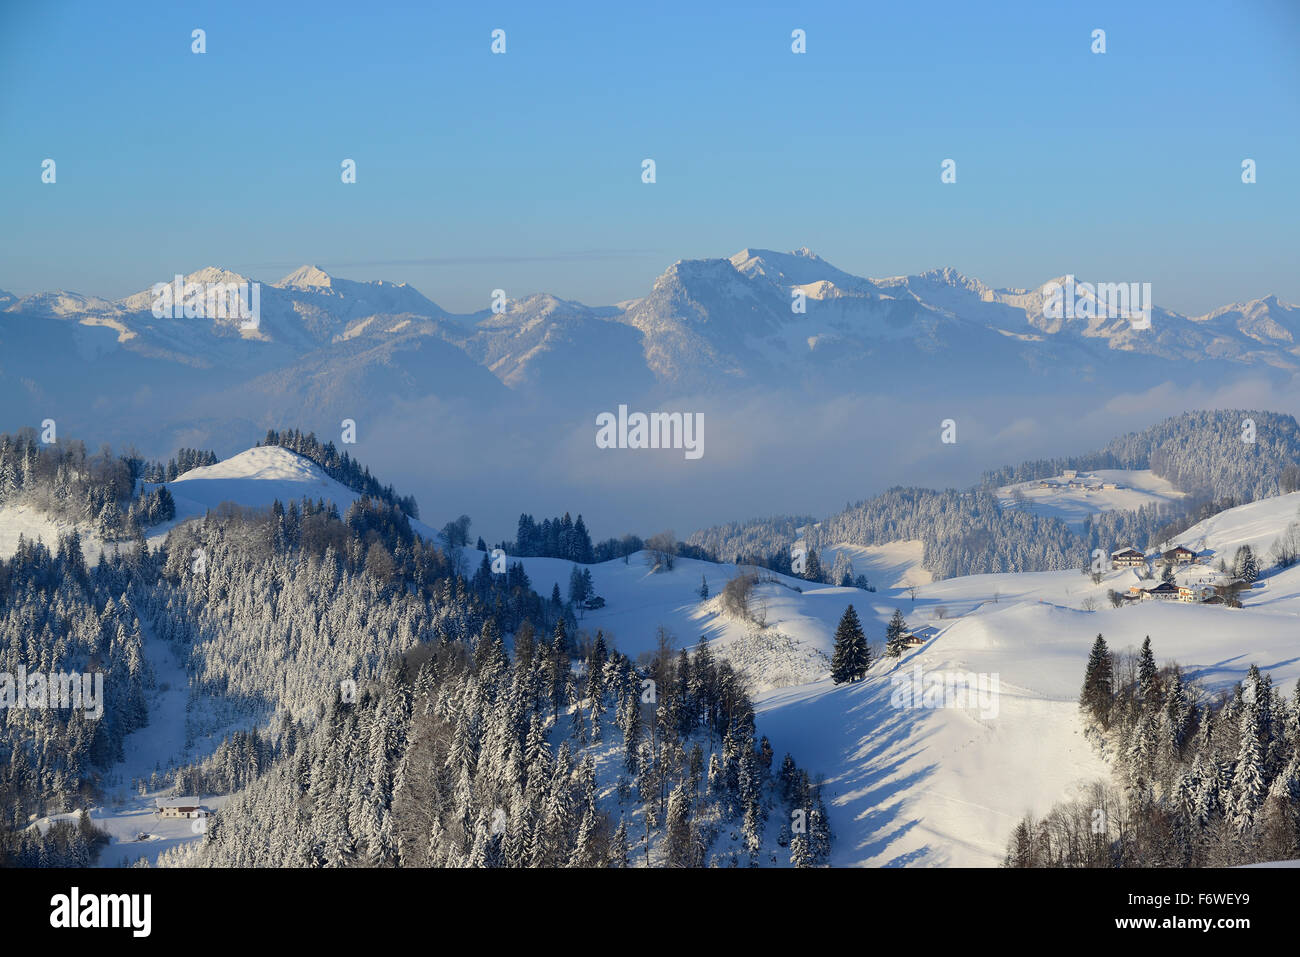 Snow-covered alps at Brennkopf, Mangfall range in background, Brennkopf, Chiemgau range, Tyrol, Austria Stock Photo